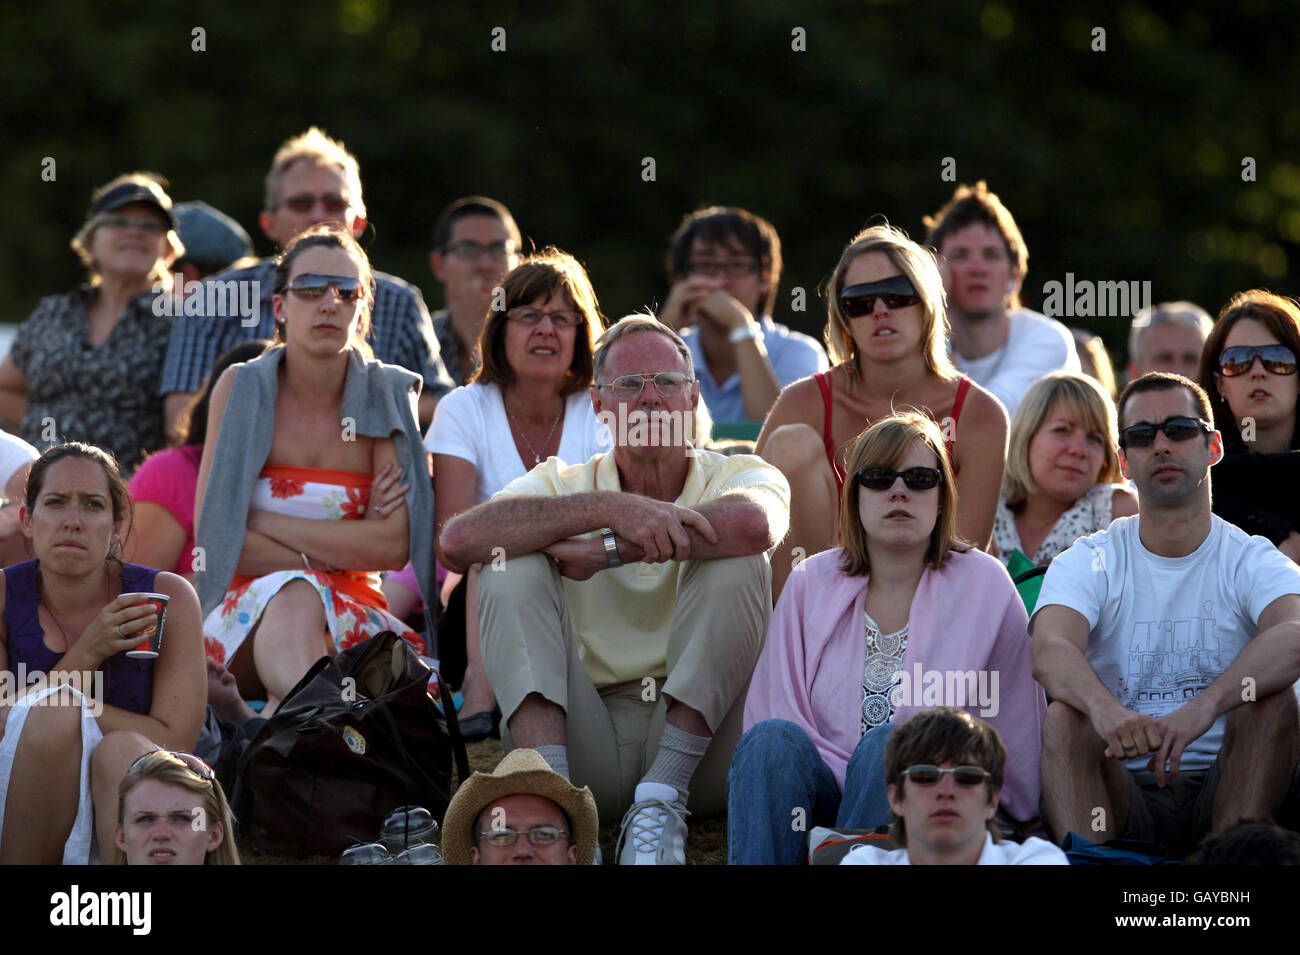 Los espectadores de Murray Mount observan el partido de Andy Murrays de Gran Bretaña contra Richard Gasquet de Francia durante el Campeonato de Wimbledon 2008 en el All England Tennis Club en Wimbledon. Foto de stock